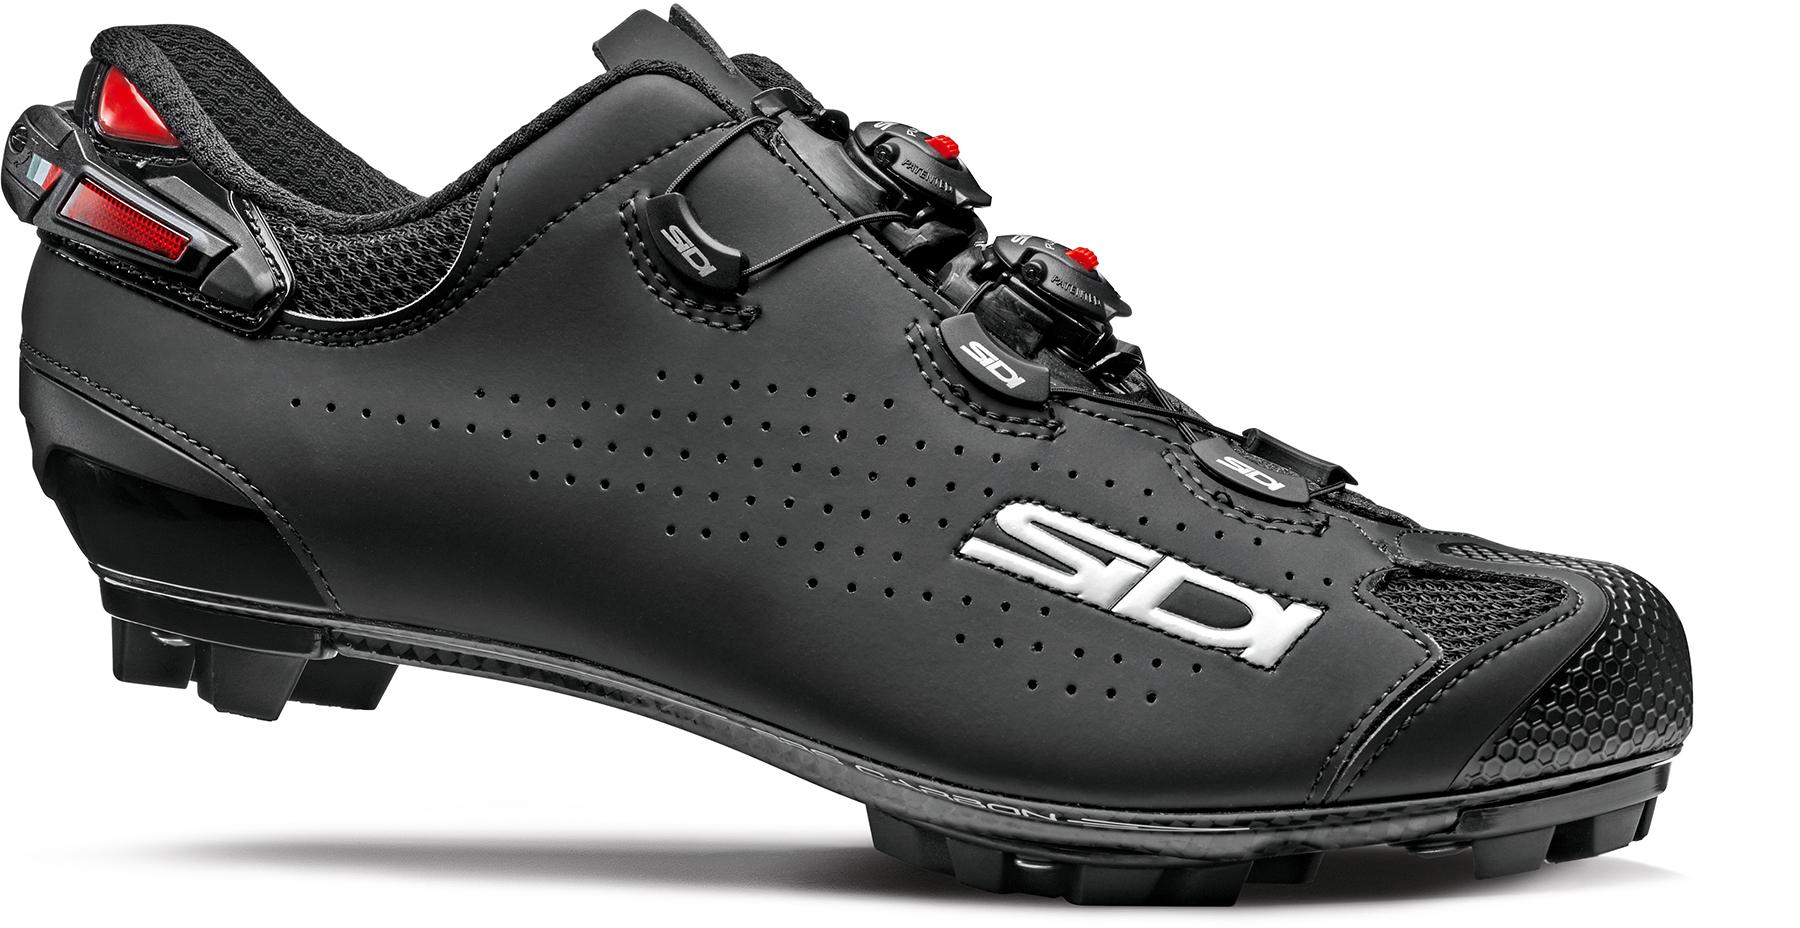 Sidi Tiger 2 Srs Carbon Mtb Cycling Shoes - Black